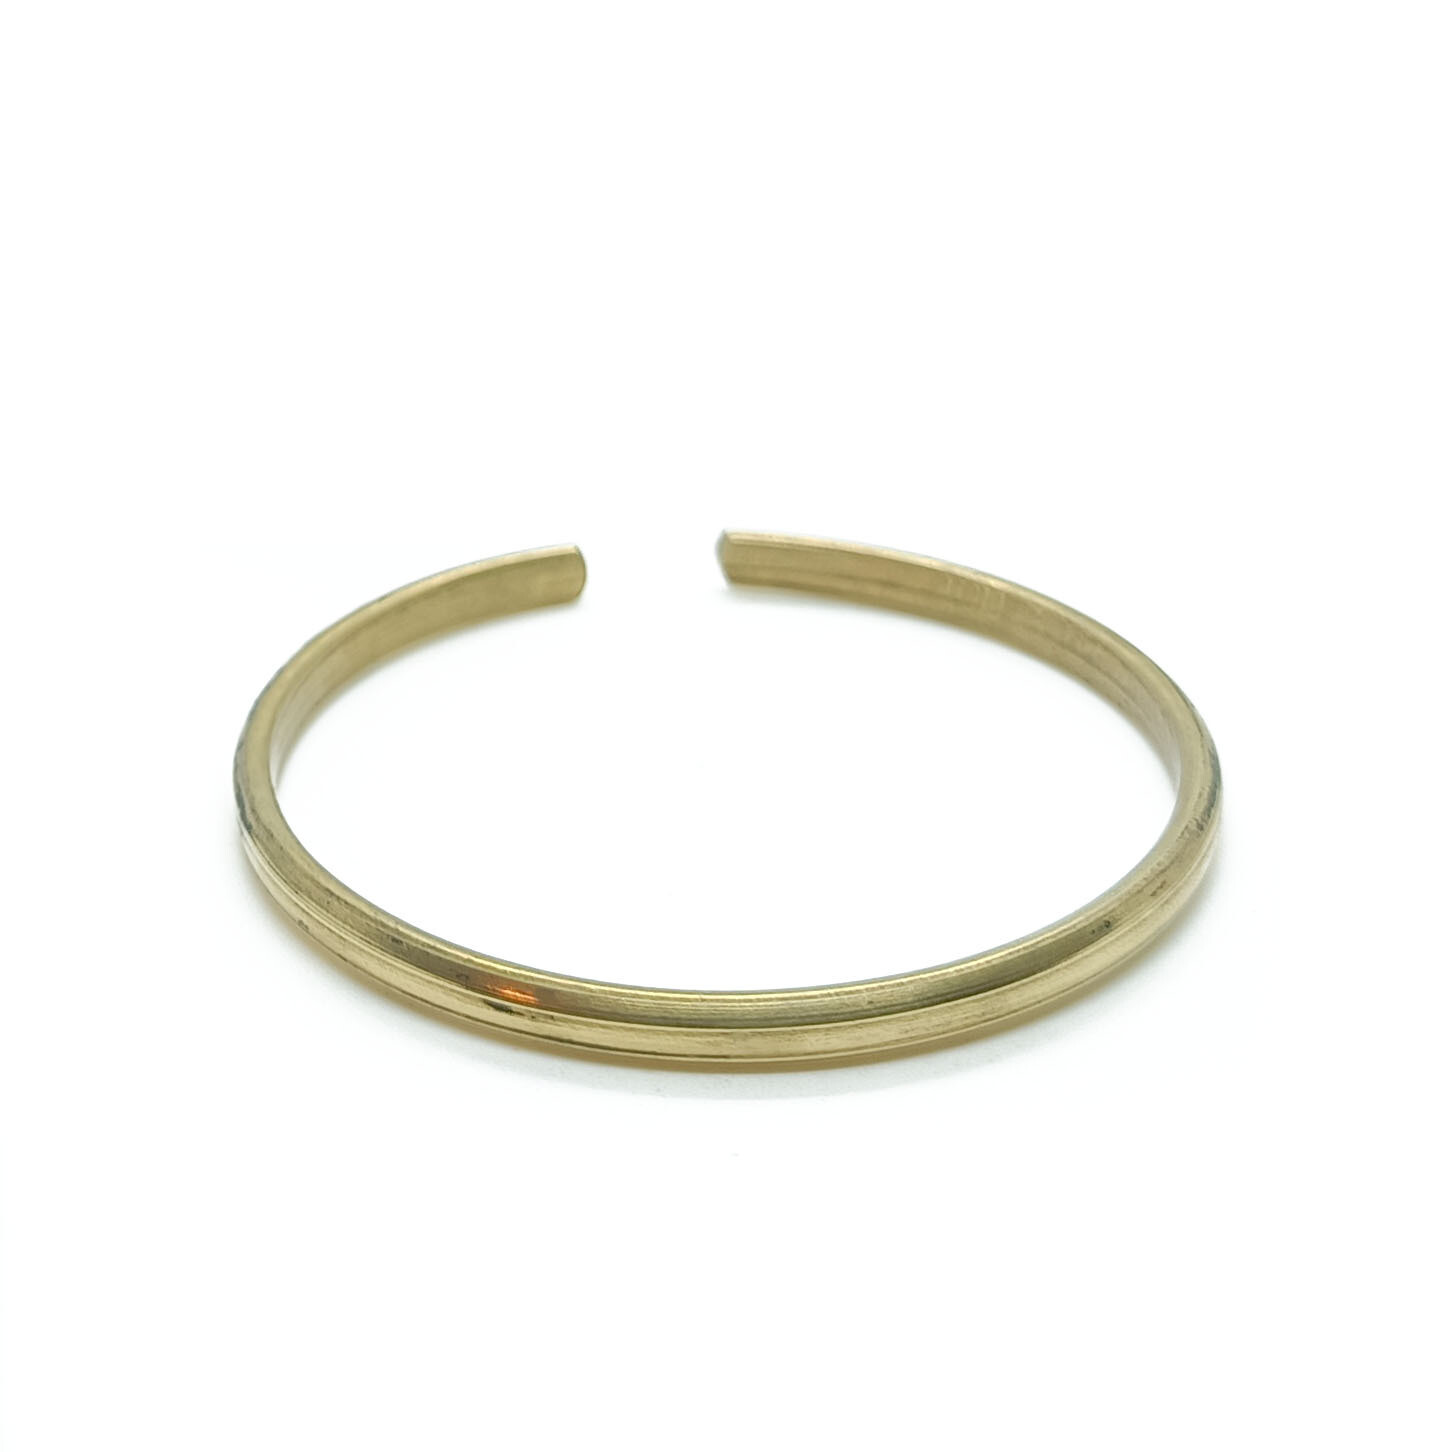 Adjustable brass bangle